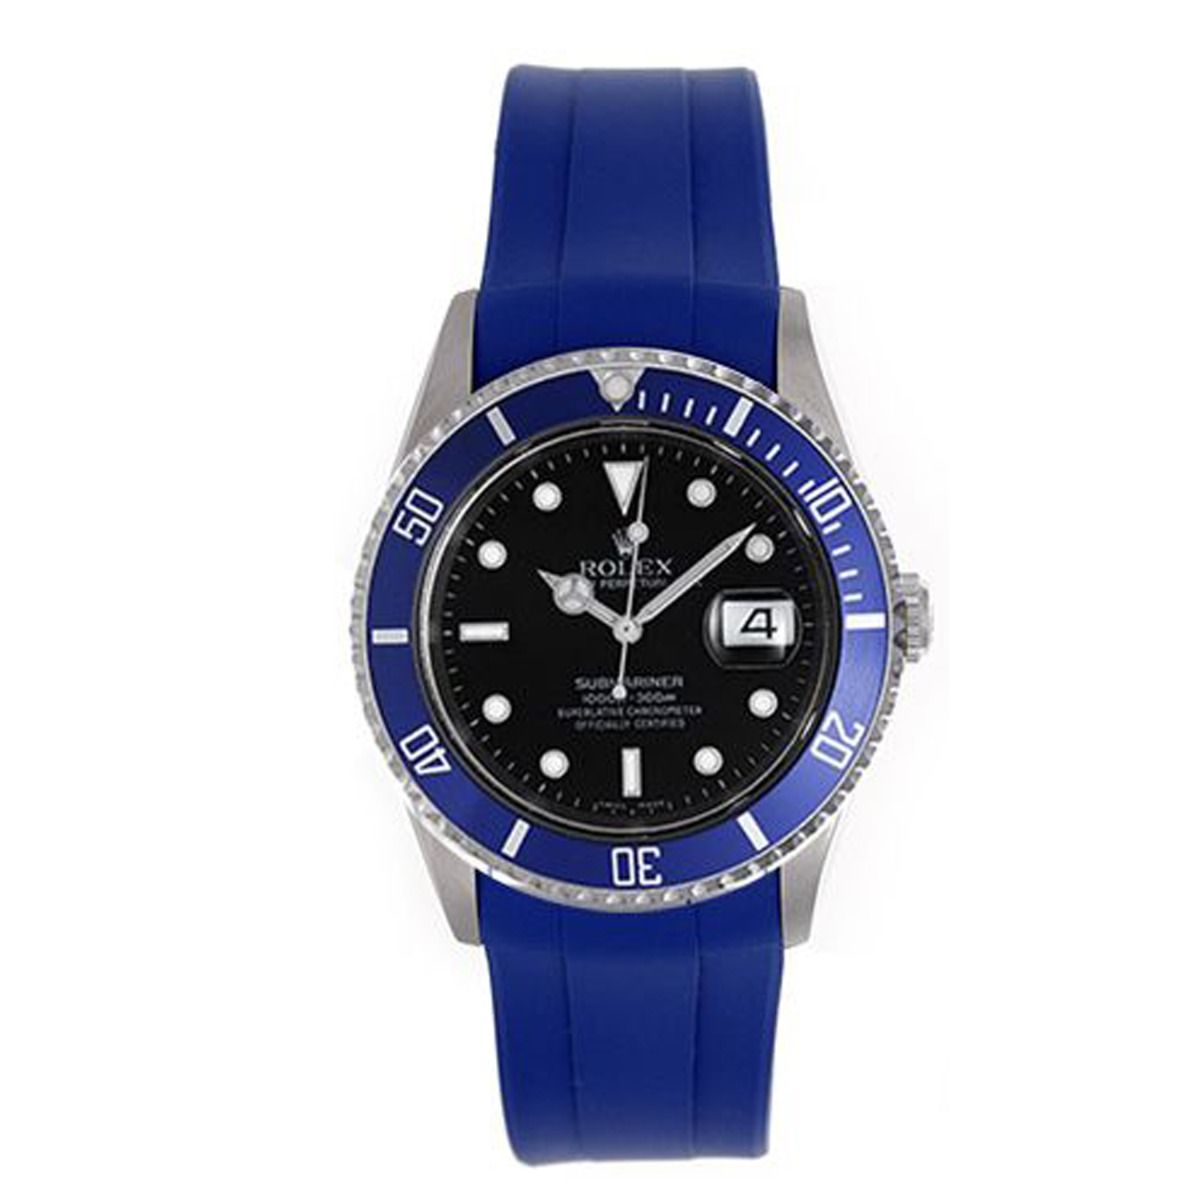 Rolex Submariner - The divers' watch